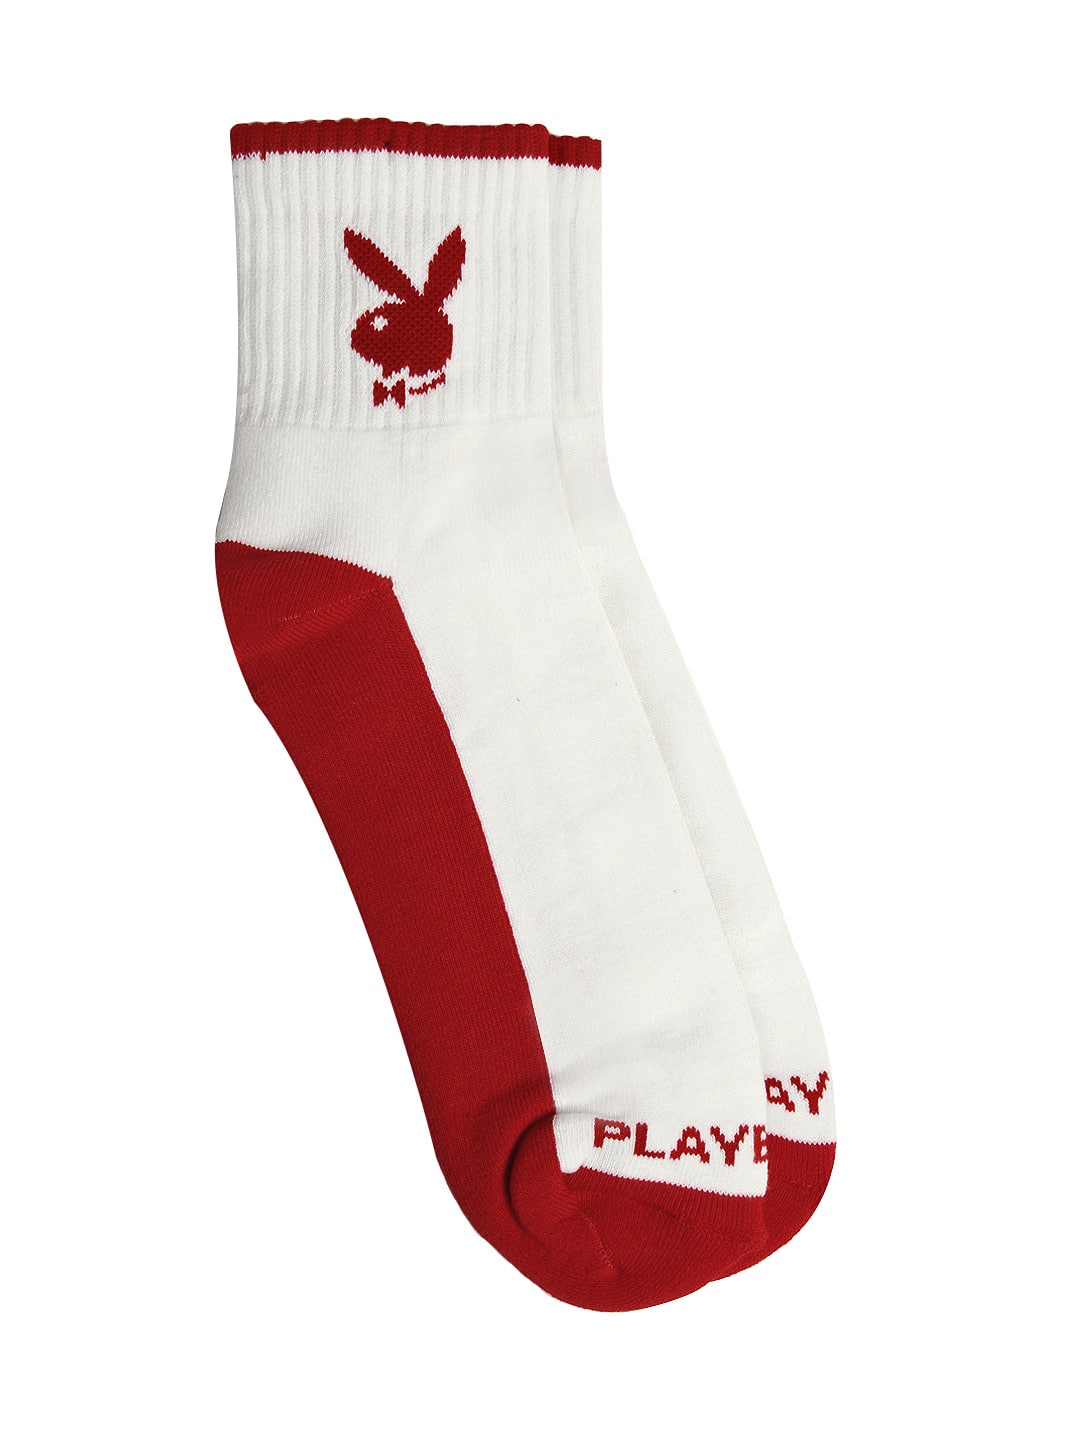 Playboy Men White and Red Socks